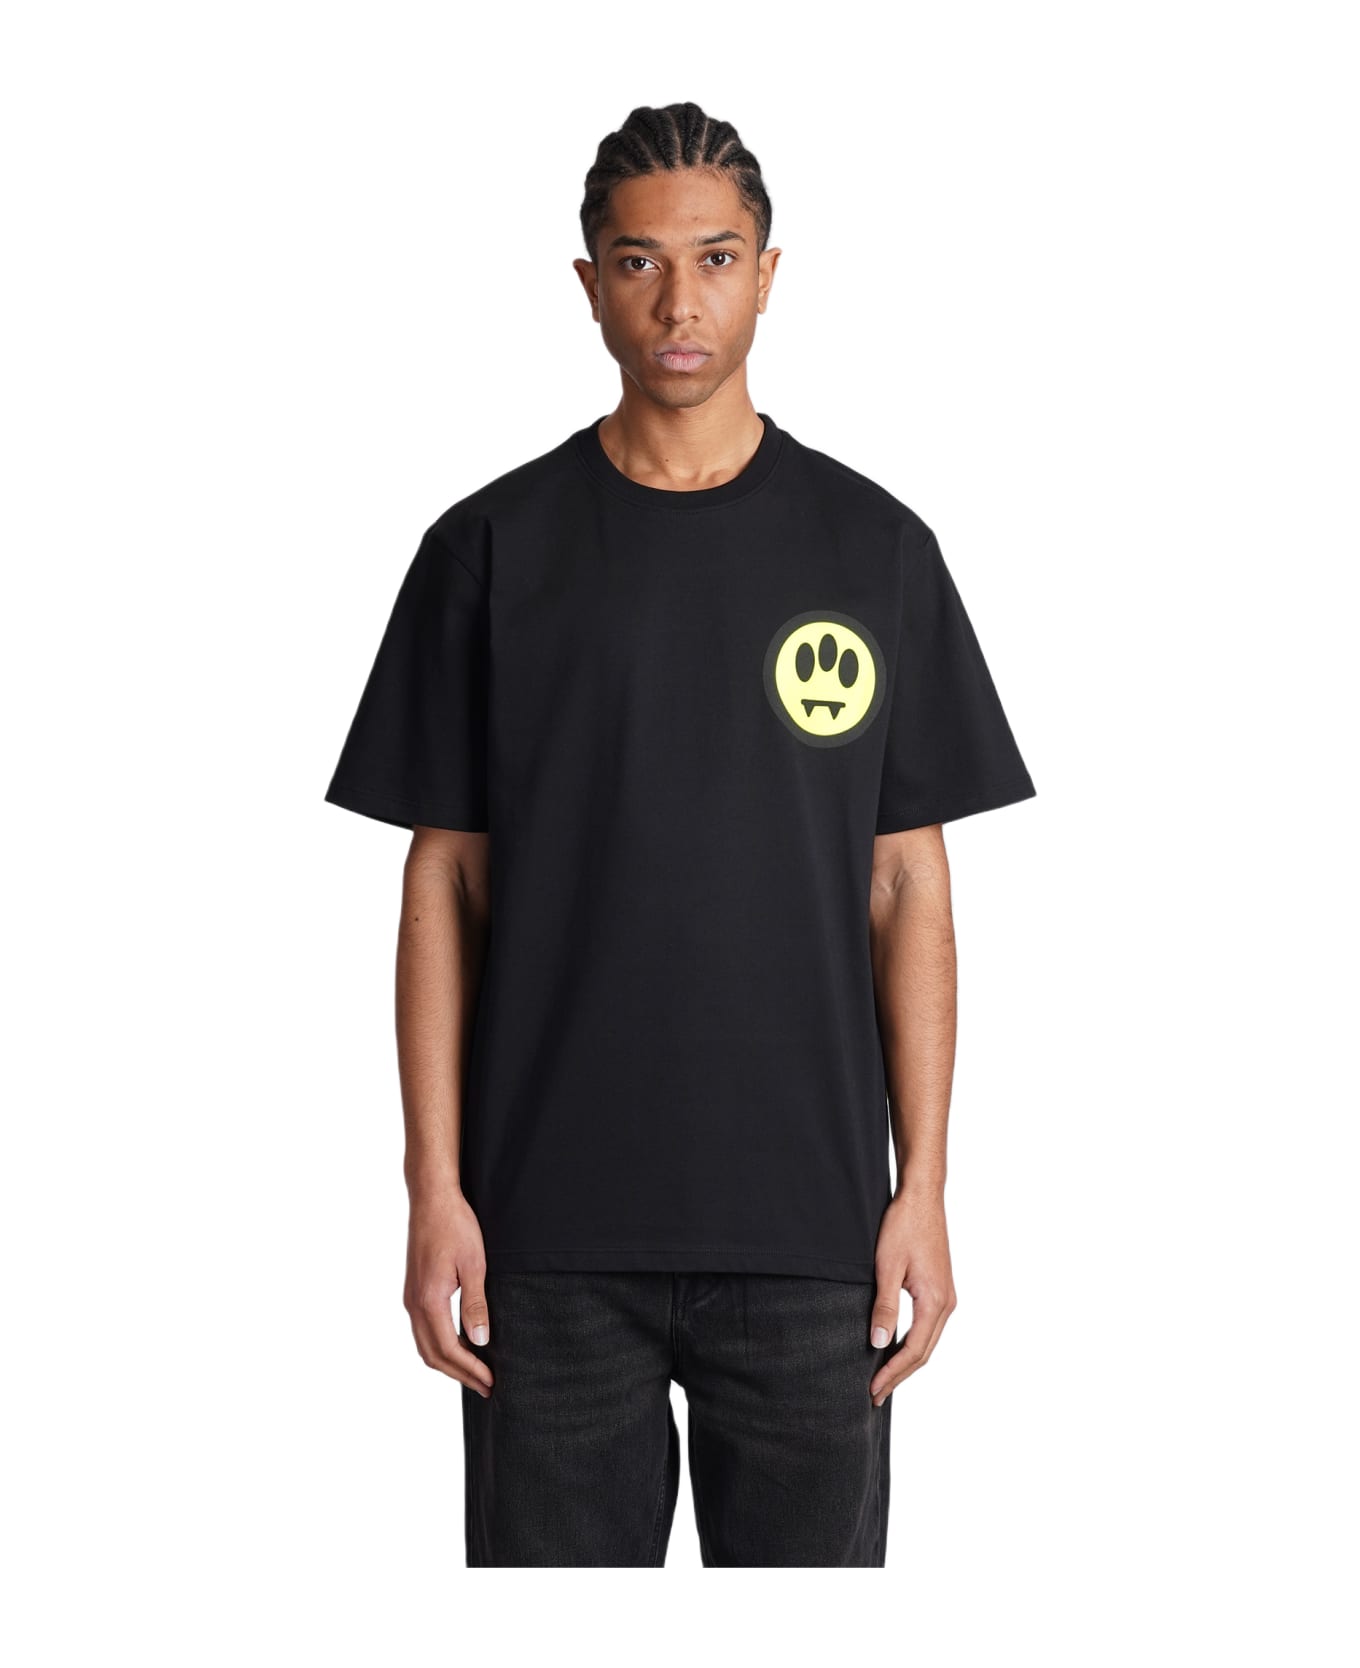 Barrow Black T-shirt With Lettering Logo - Black Tシャツ